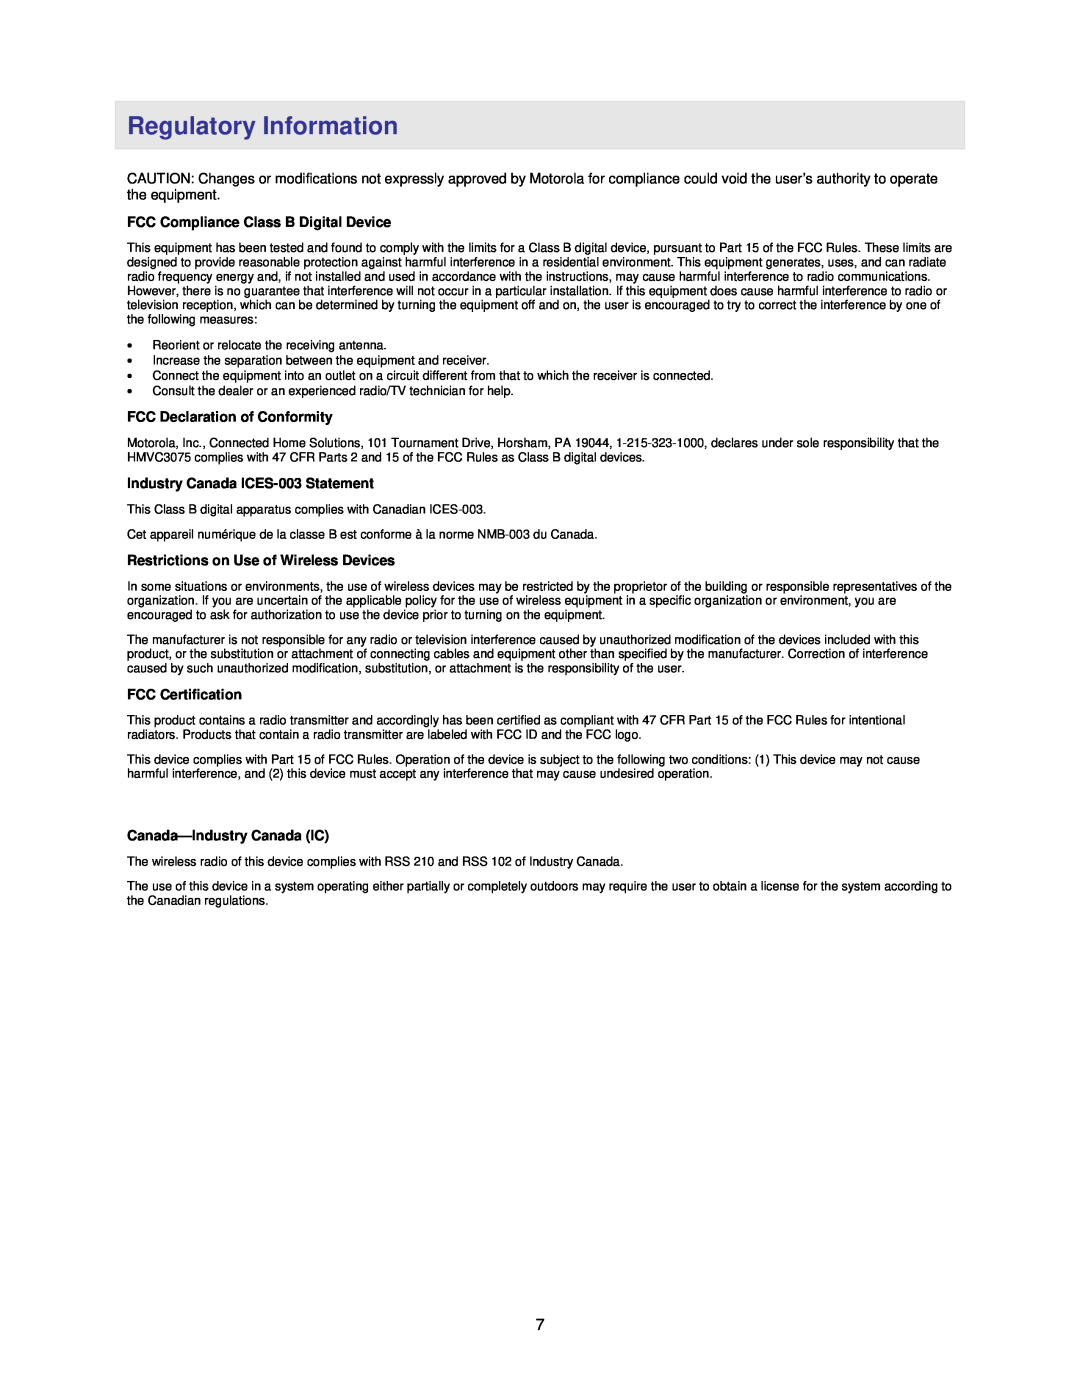 Nikon HMSC7075 manual Regulatory Information, FCC Compliance Class B Digital Device, FCC Declaration of Conformity 